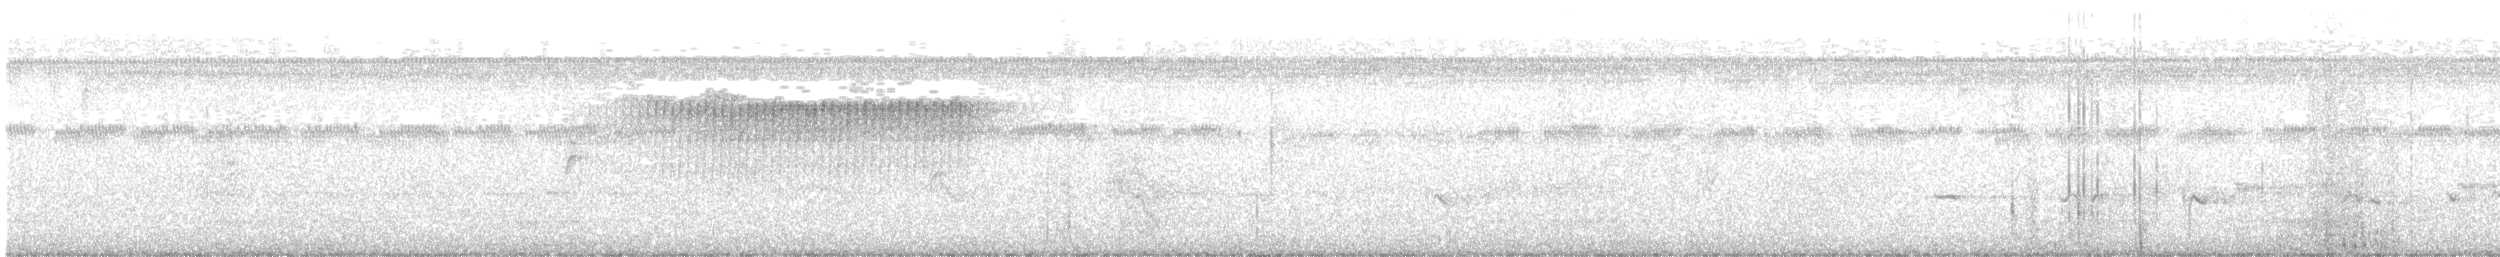 Paruline vermivore - ML445894351